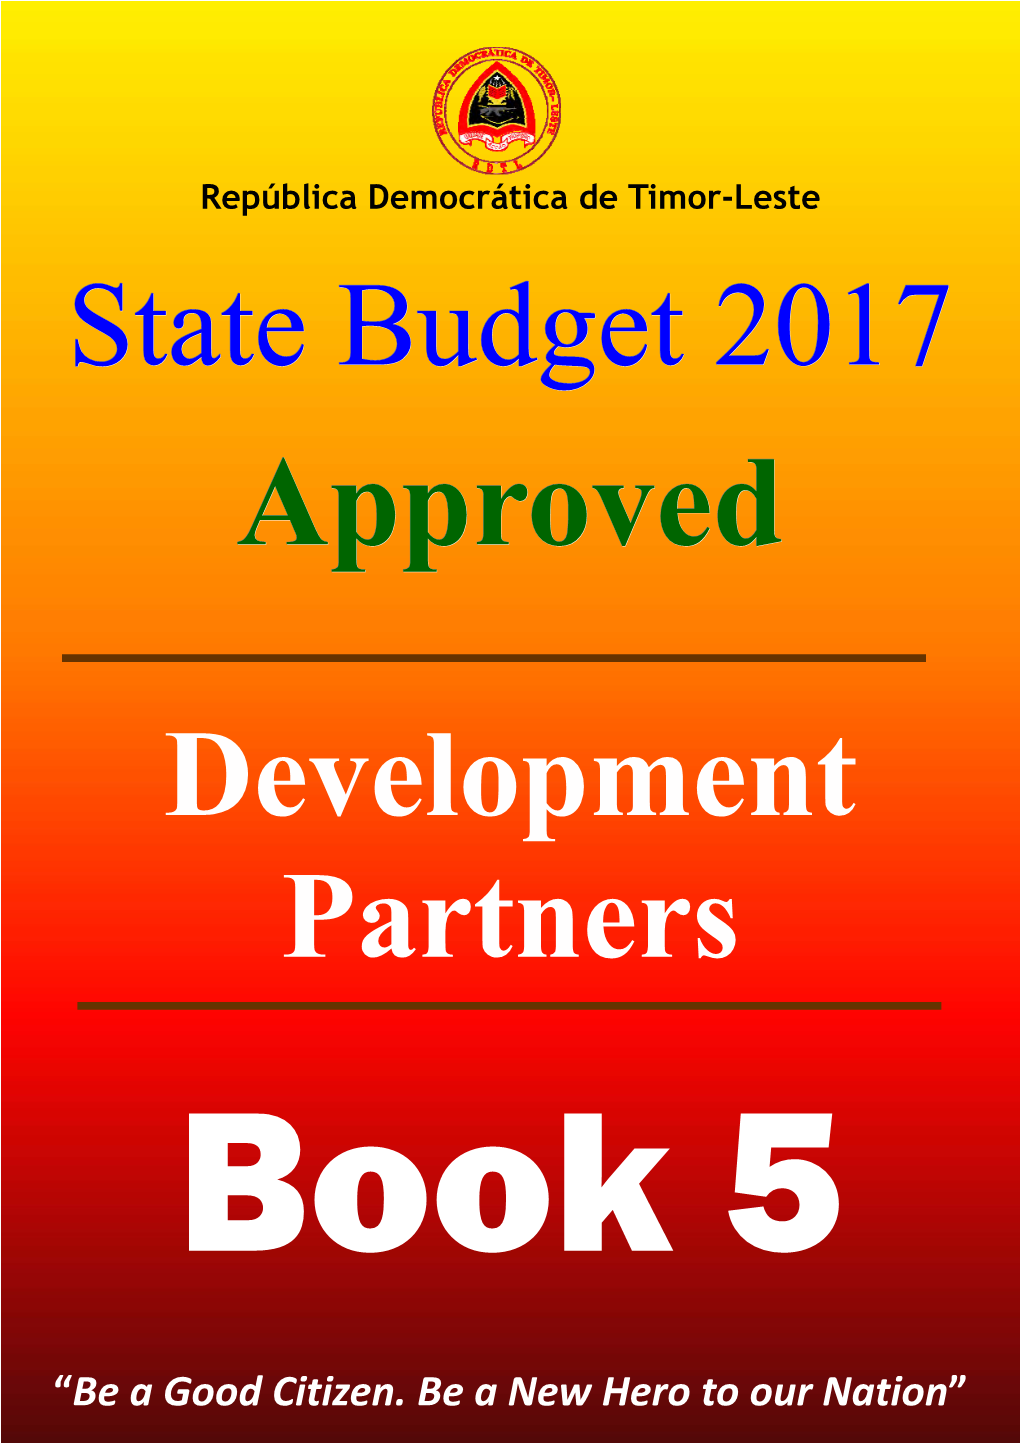 Book 5 Development Partners